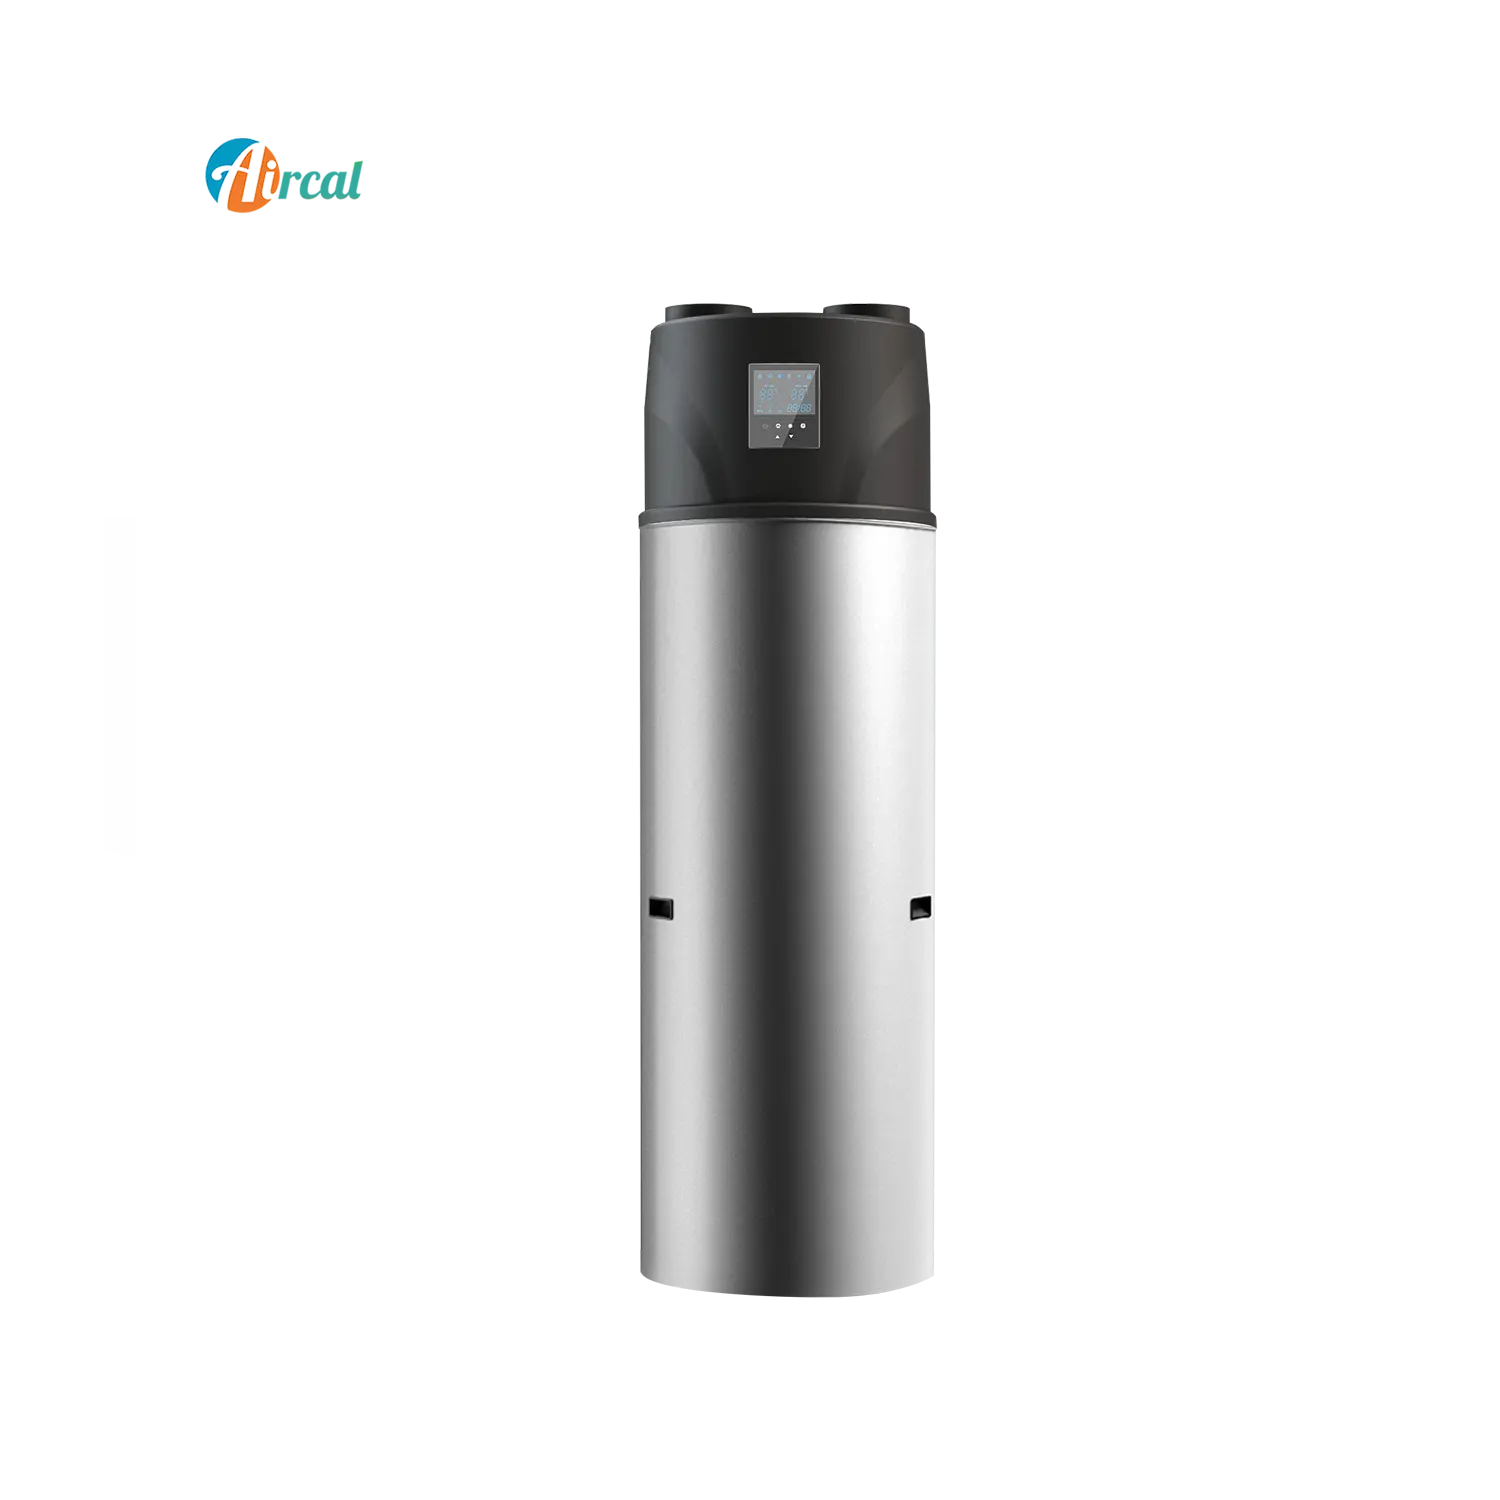 R290 Beli pompa panas tanque, tanque aplikasi rumah tangga baru